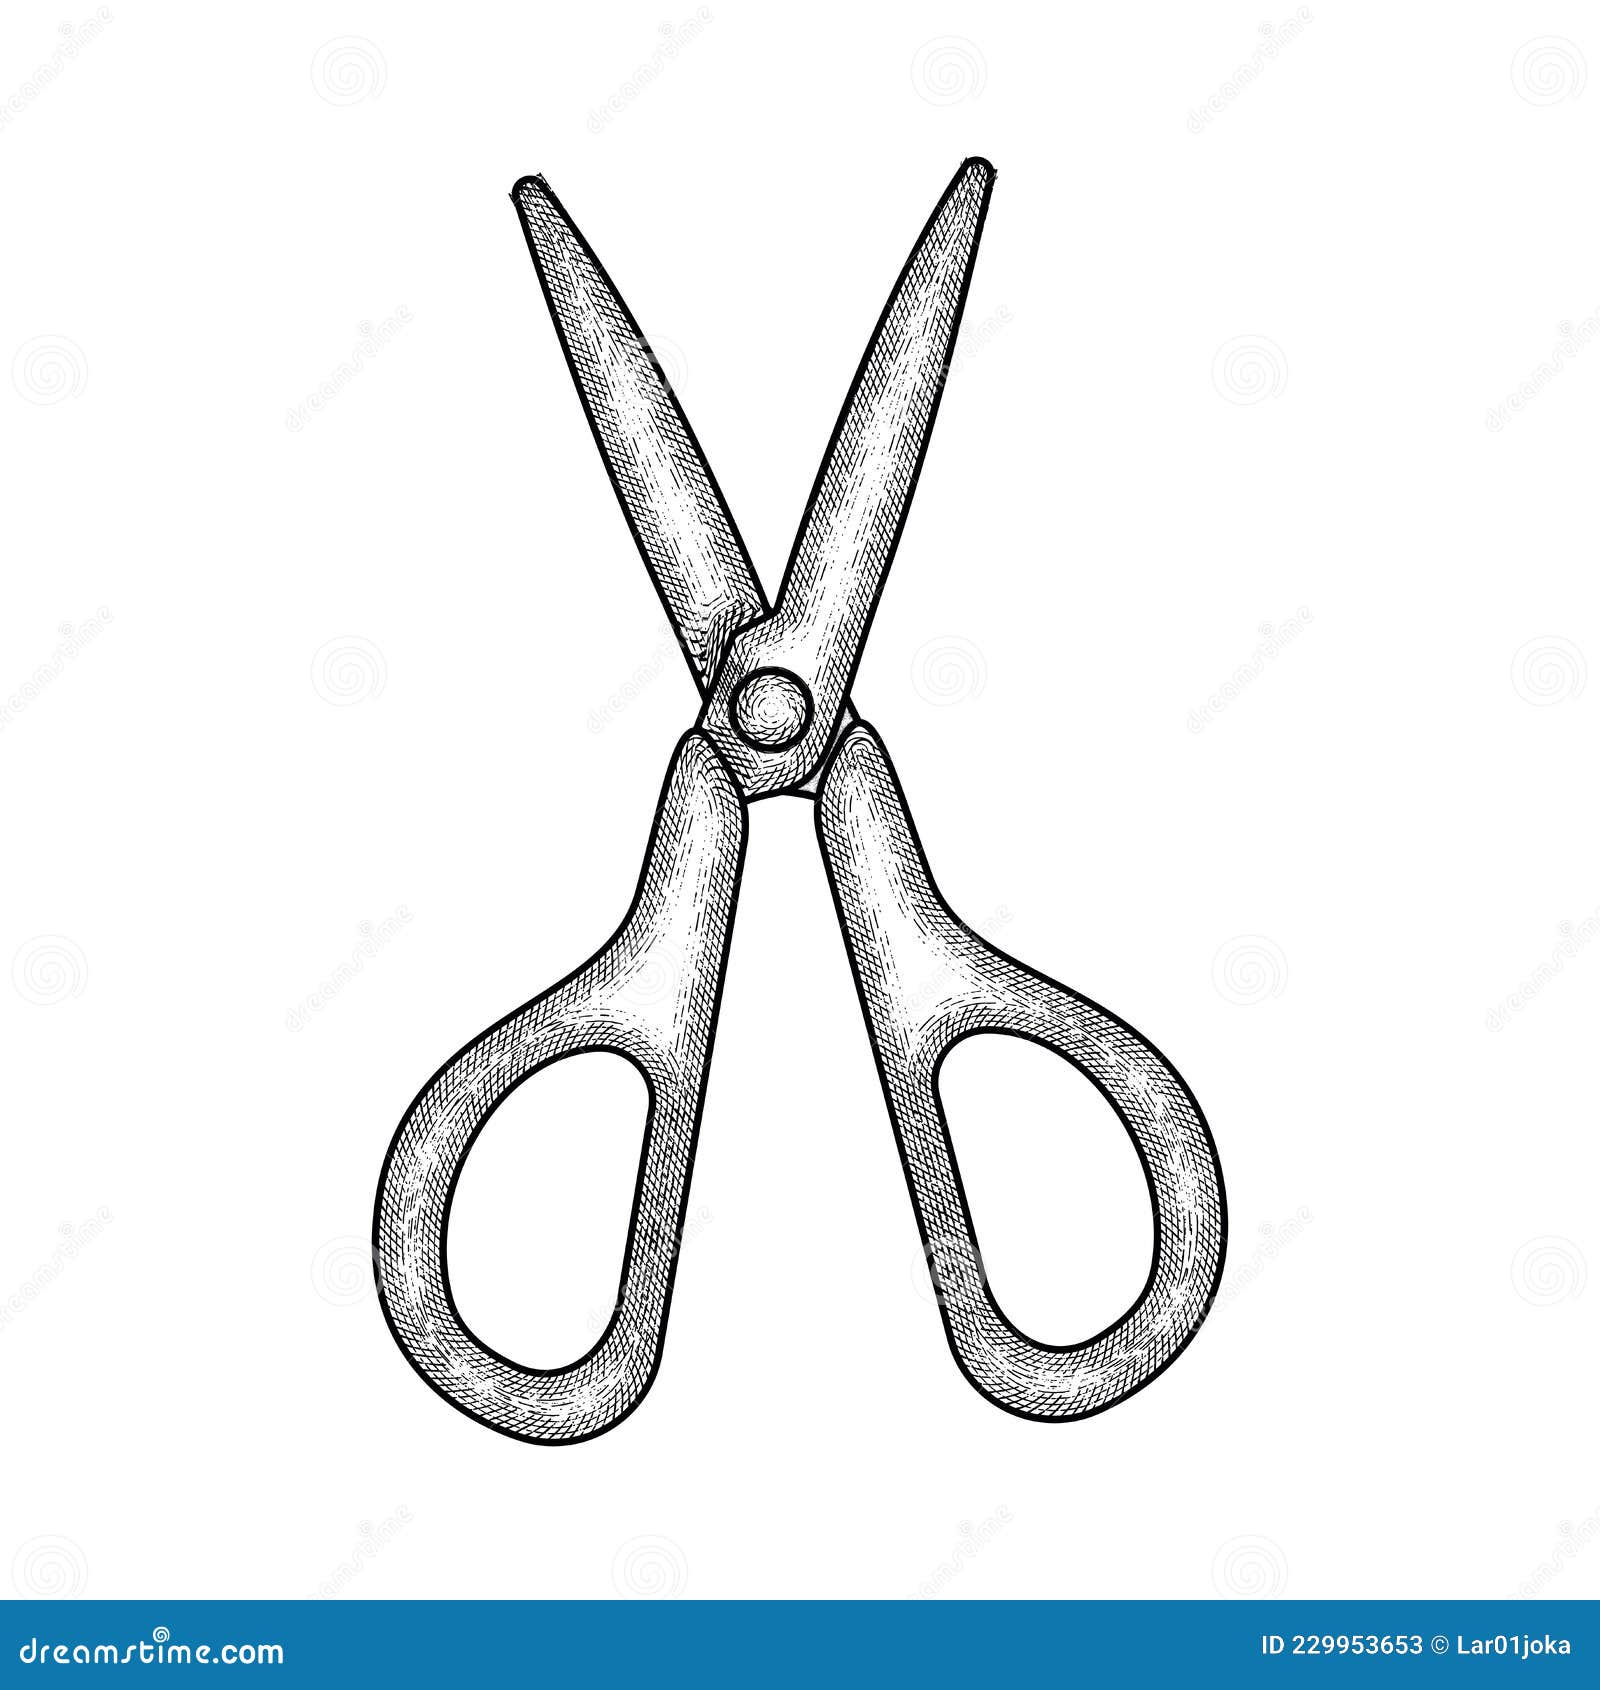 Scissors cut school supply icon Royalty Free Vector Image